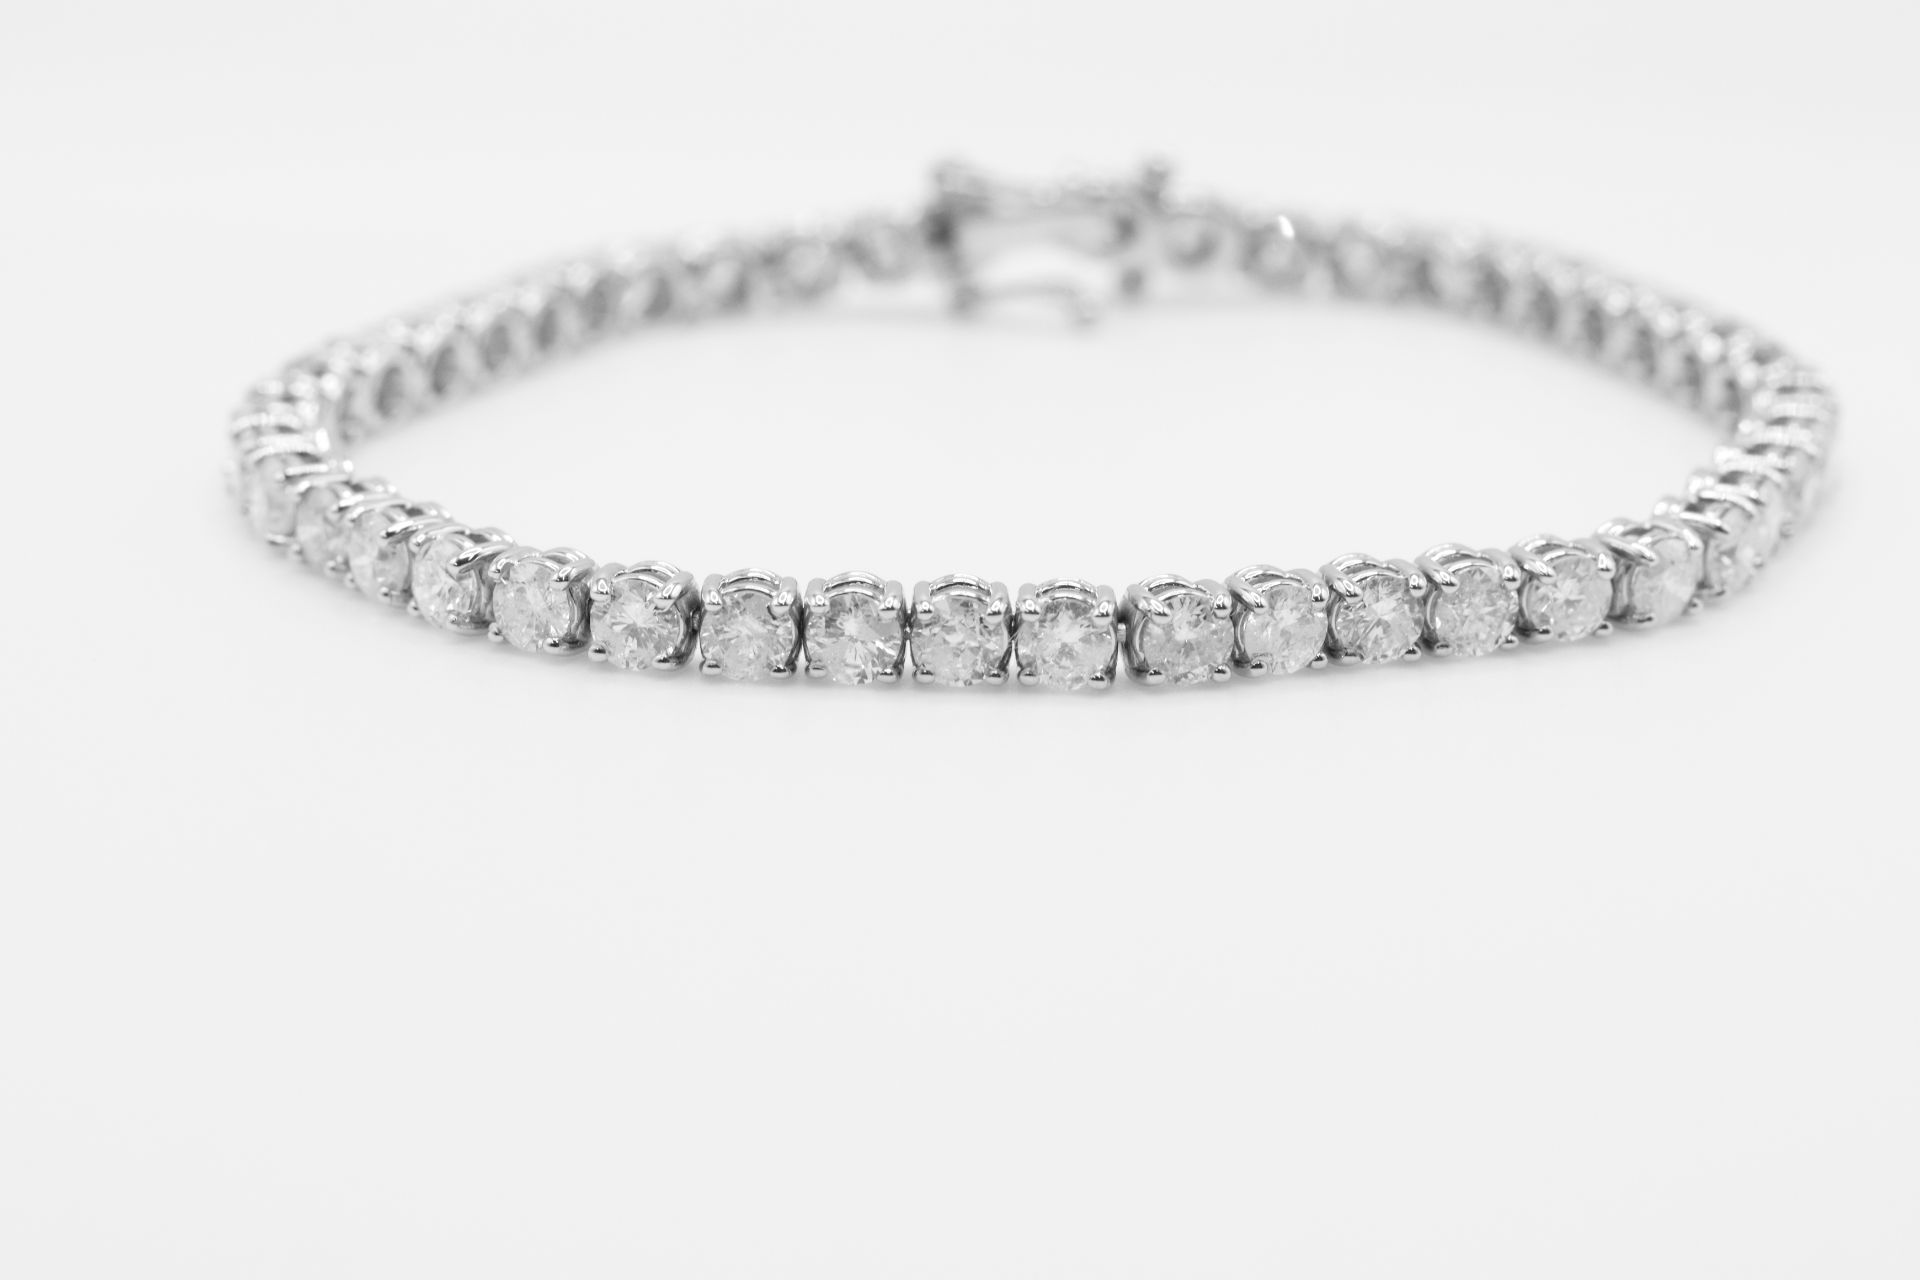 9.0 Carat 18ct White Gold Tennis Bracelet set with Round Brilliant Cut Natural Diamonds - Image 6 of 17